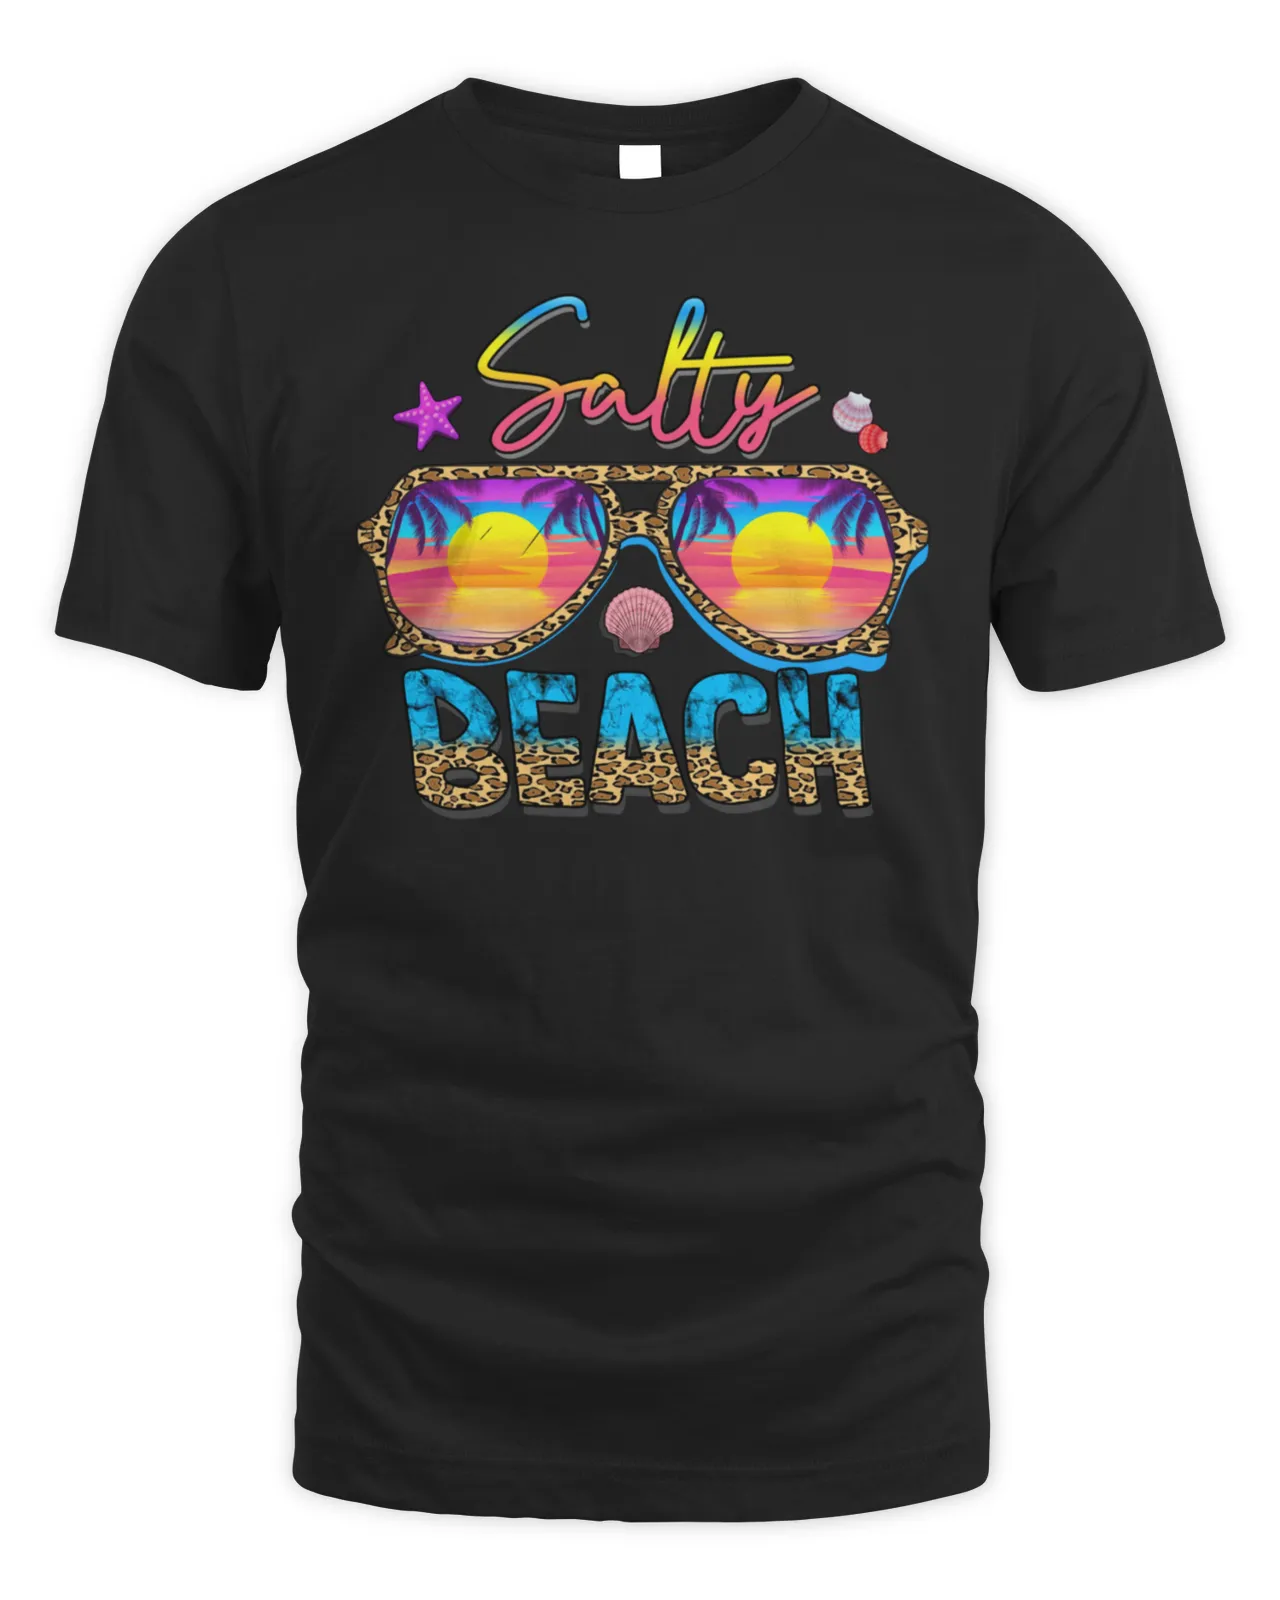 Feeling Salty Beach Shirt Beach Gift Salty Beach T-Shirt,Salty Shirt Beach Beach Shirt Vacation Gift Salty Vacation Shirt